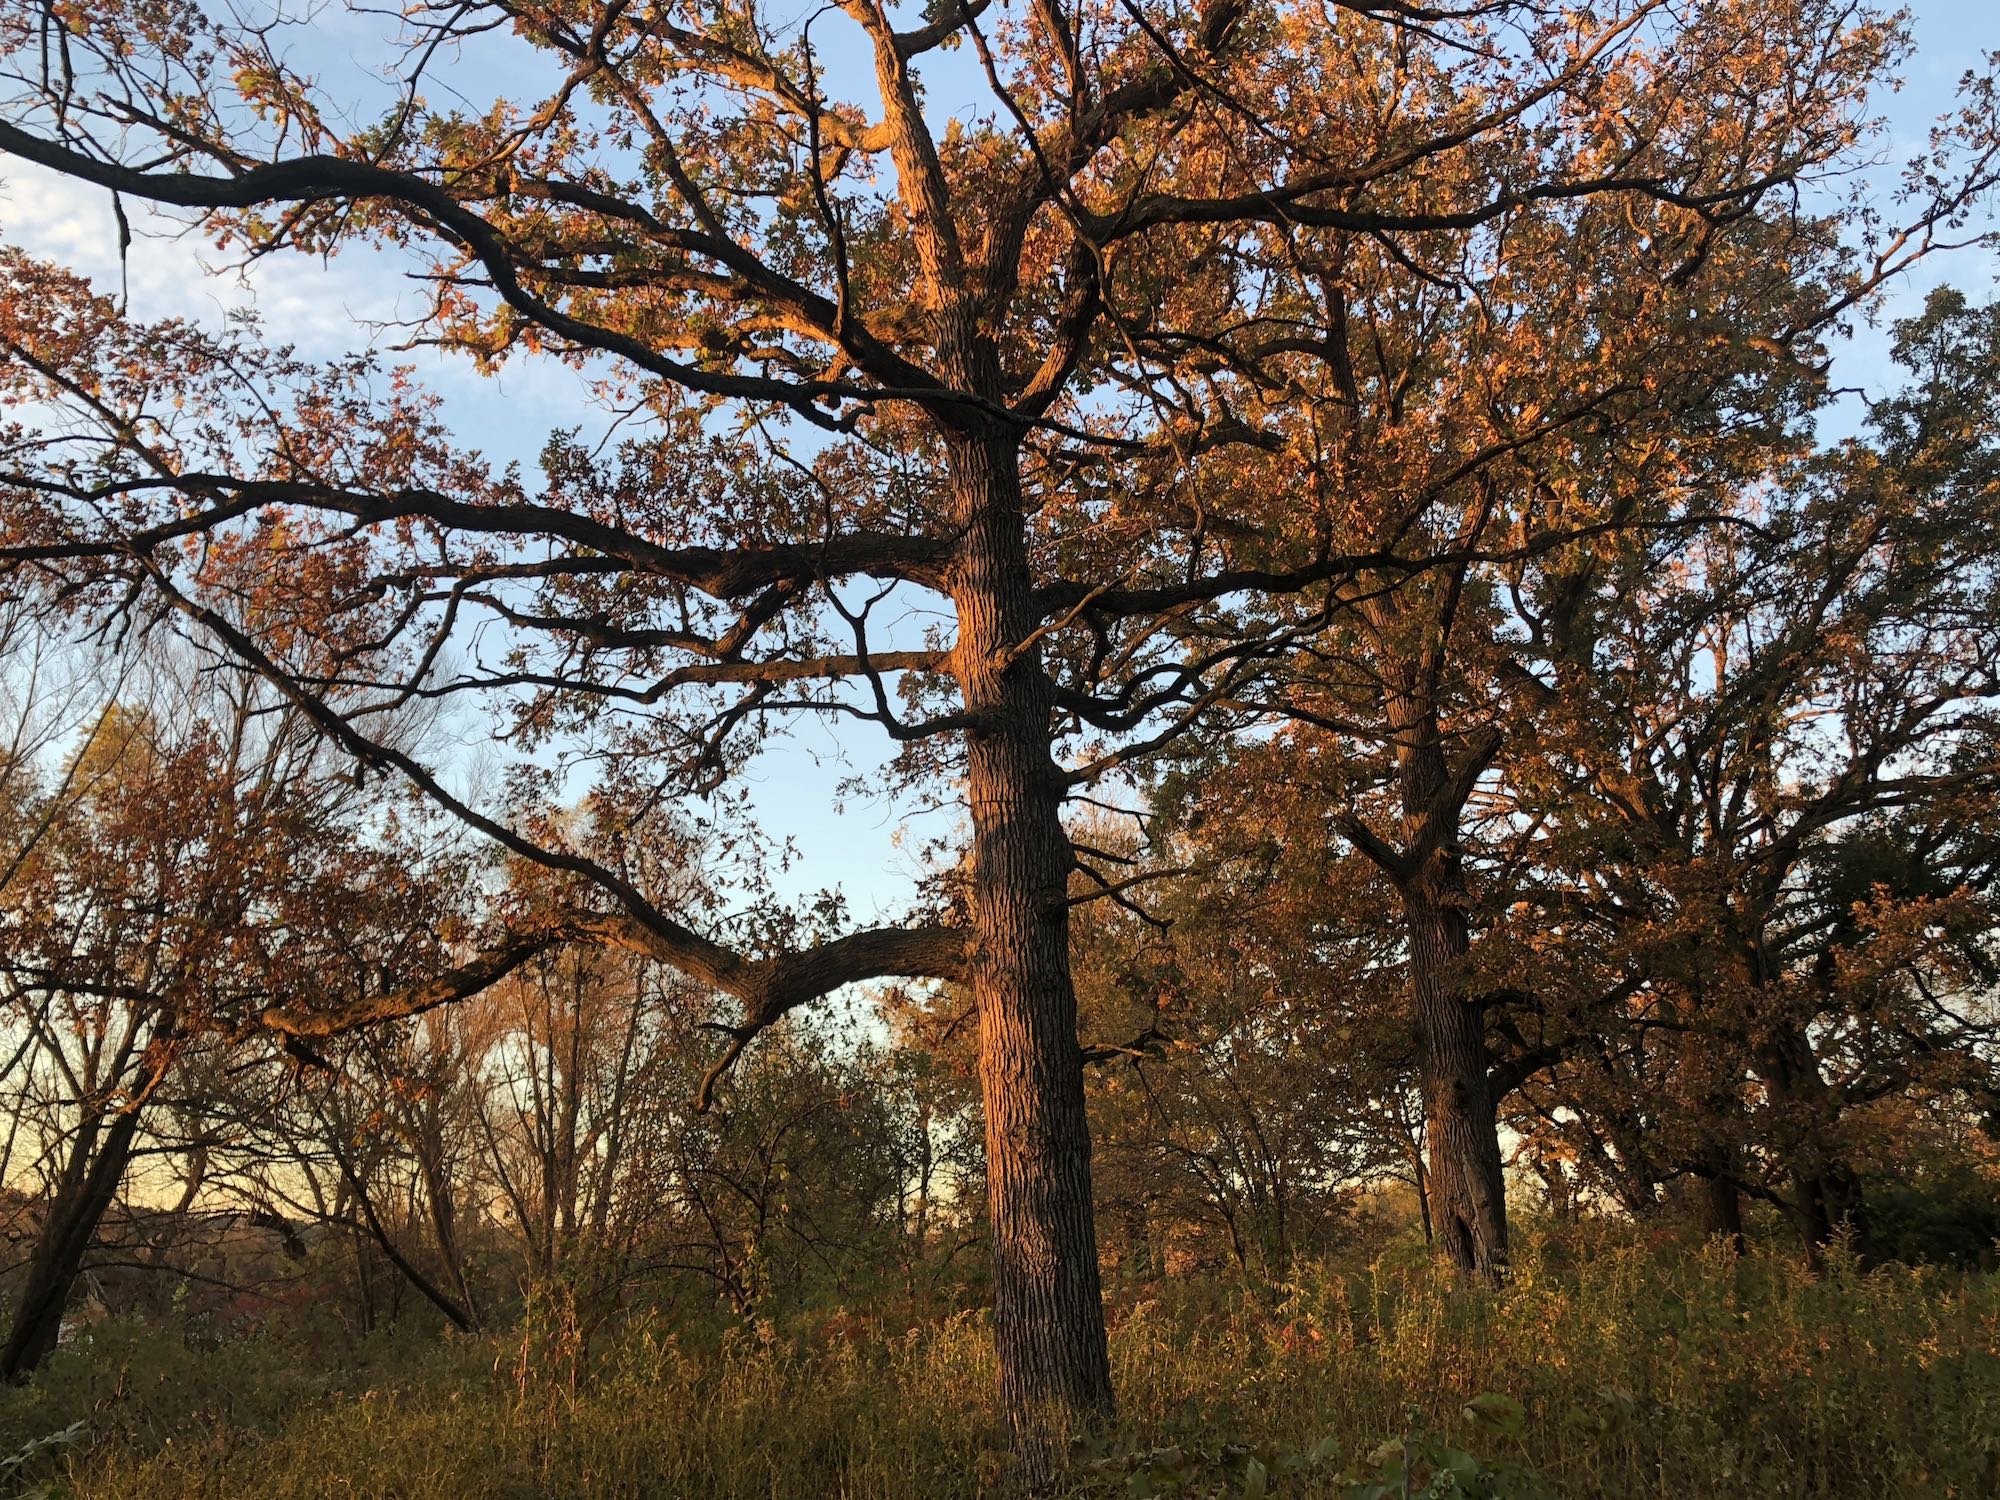 Oak Savanna in the University of Wisconsin Arboretum in Madison, Wisconsin on October 16, 2018.